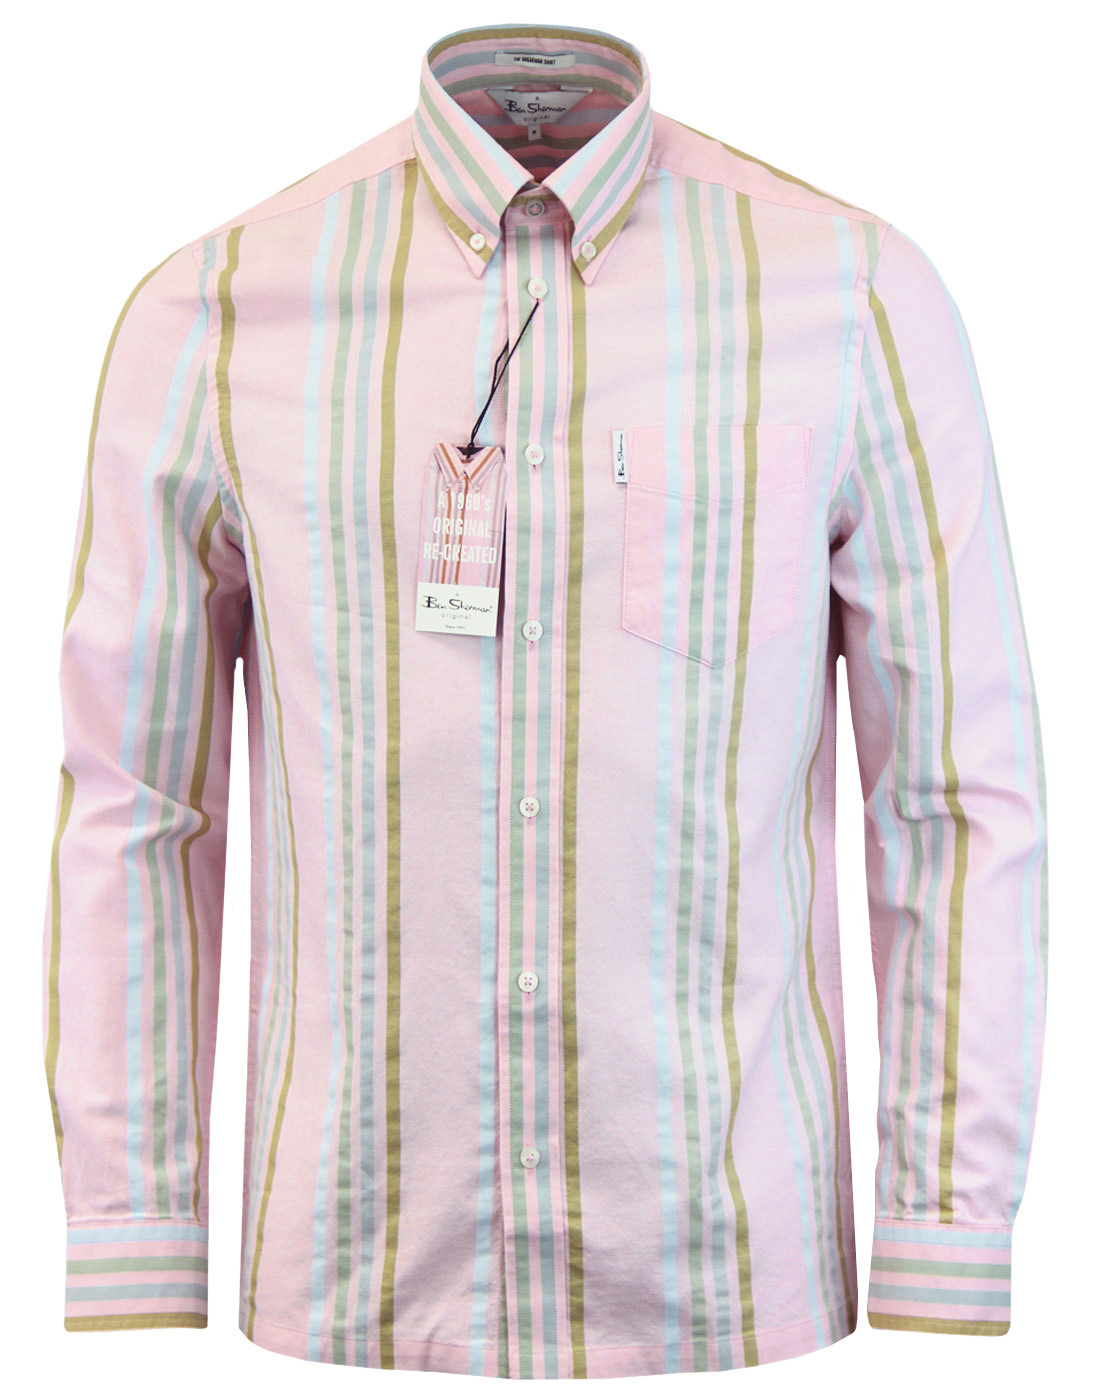 BEN SHERMAN Mens 60s Mod Archive Print Candy Stripe Shirt in Pink